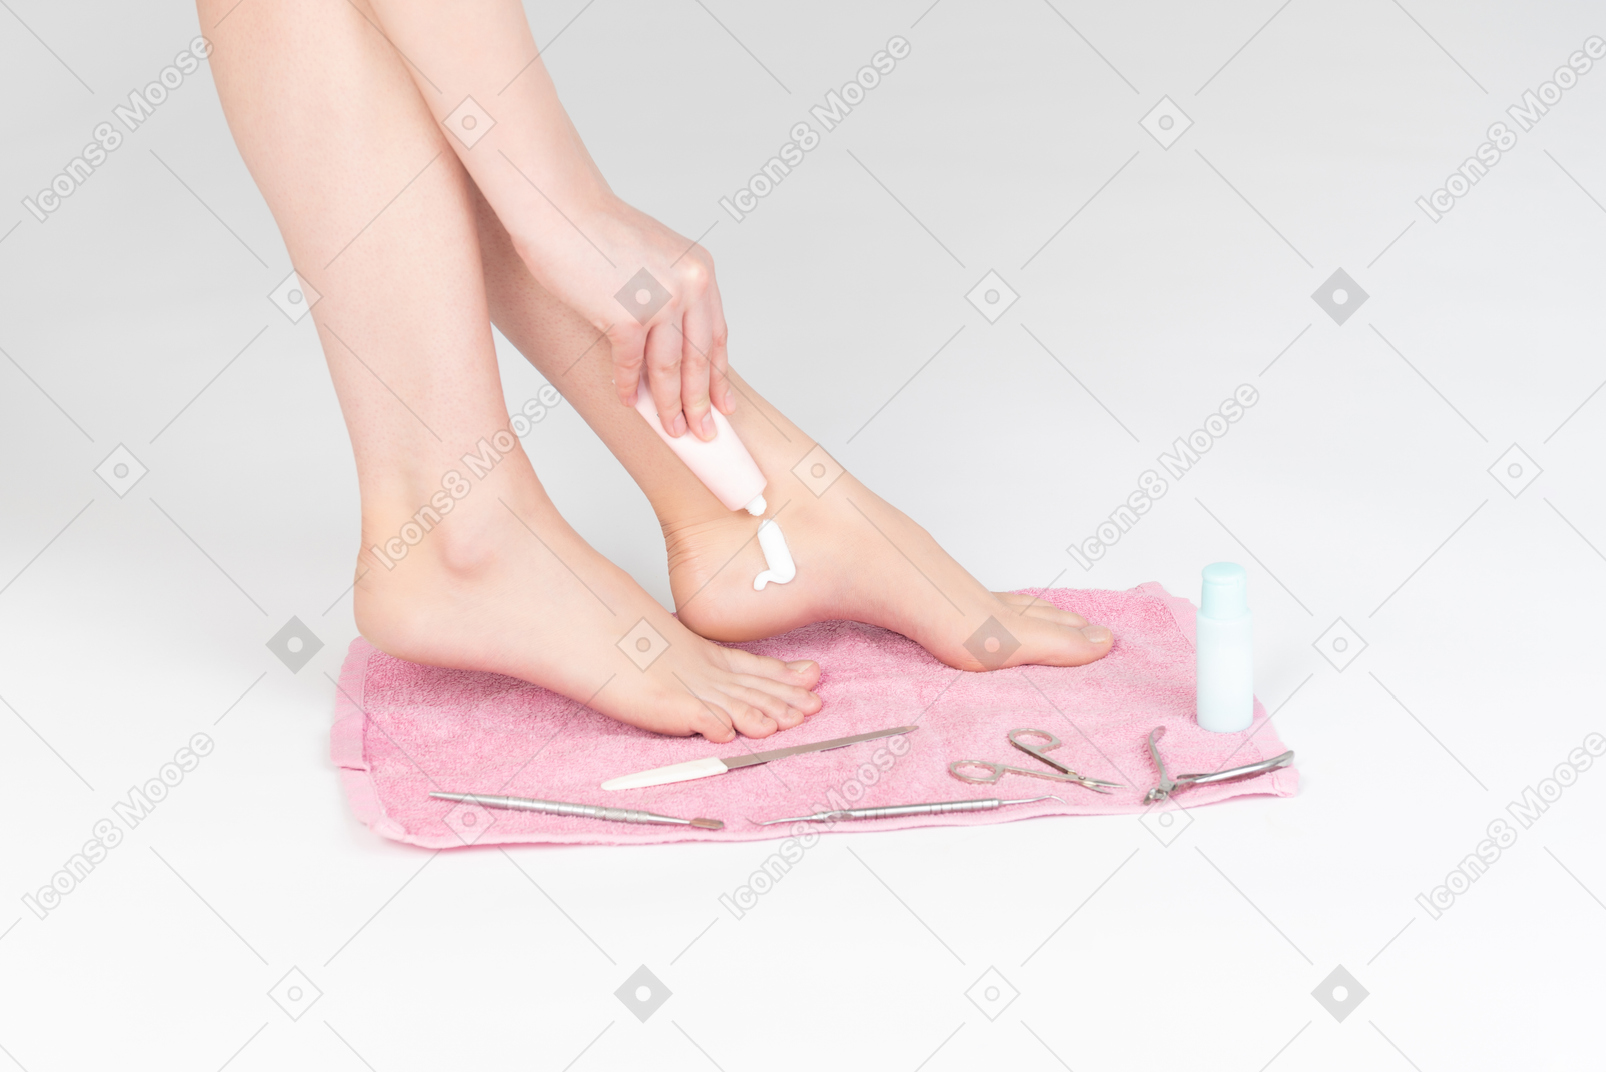 Shot of female legs and woman applying cream